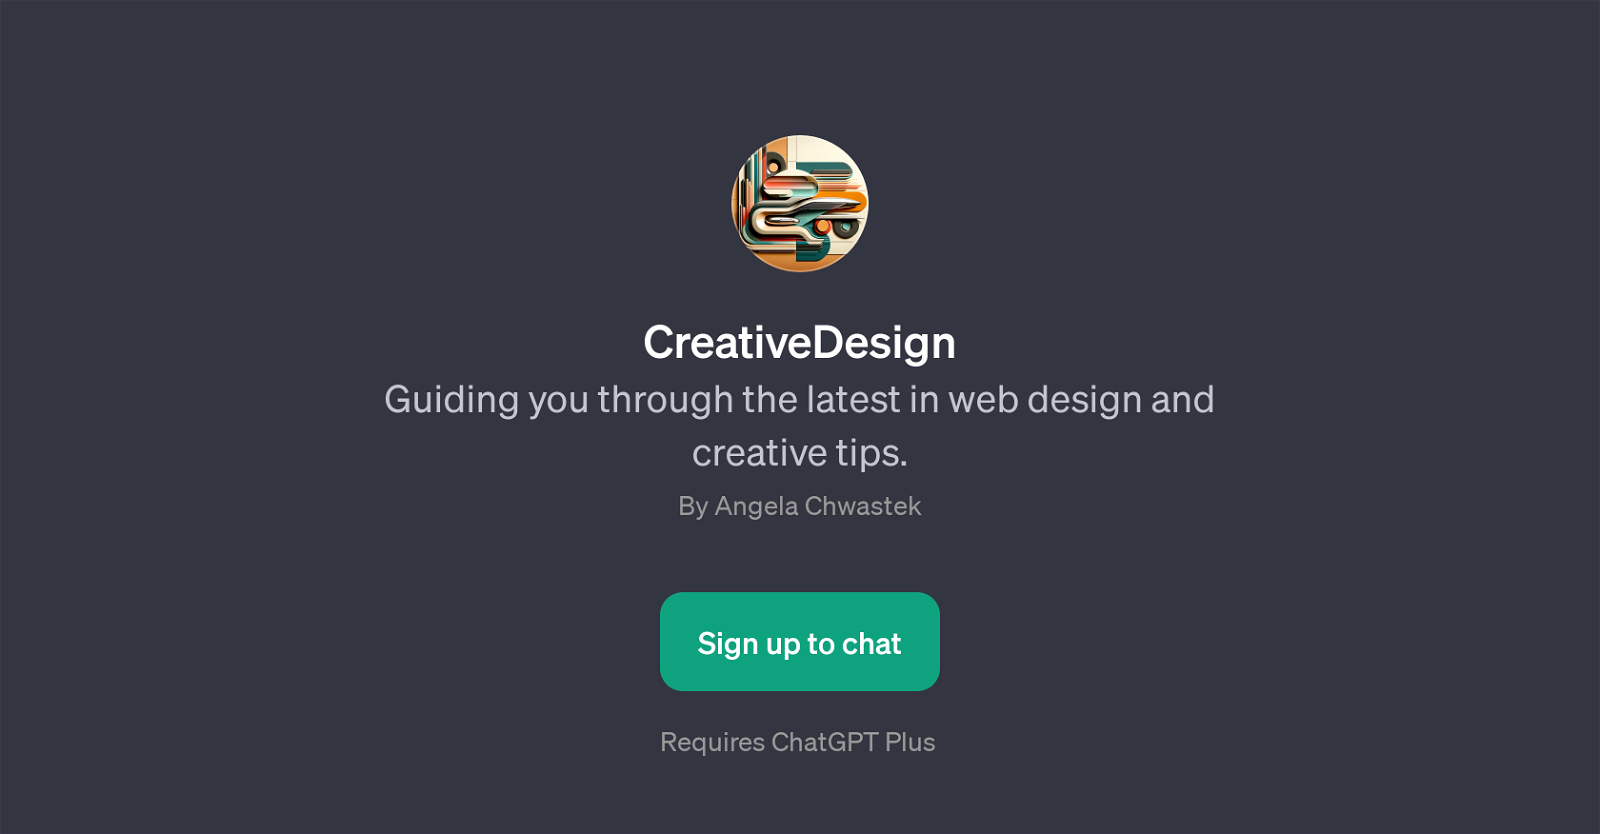 CreativeDesign website